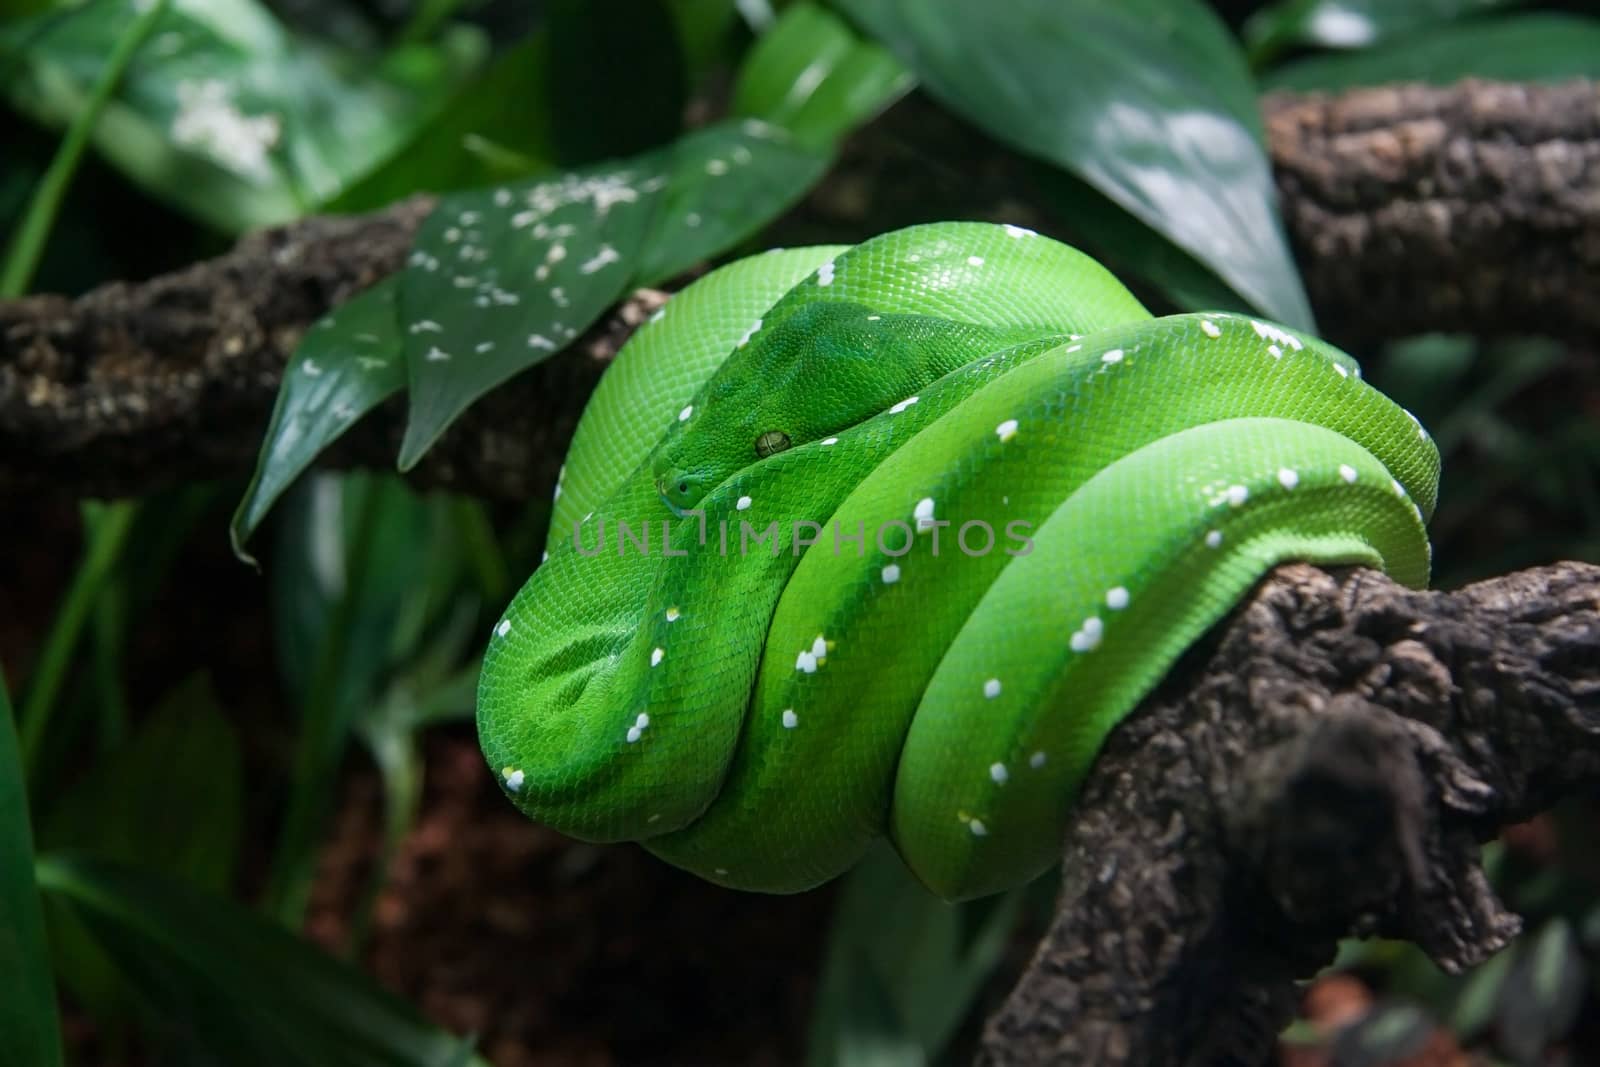 Green tree python (Morelia viridis) resting on tree branch by Ivanko